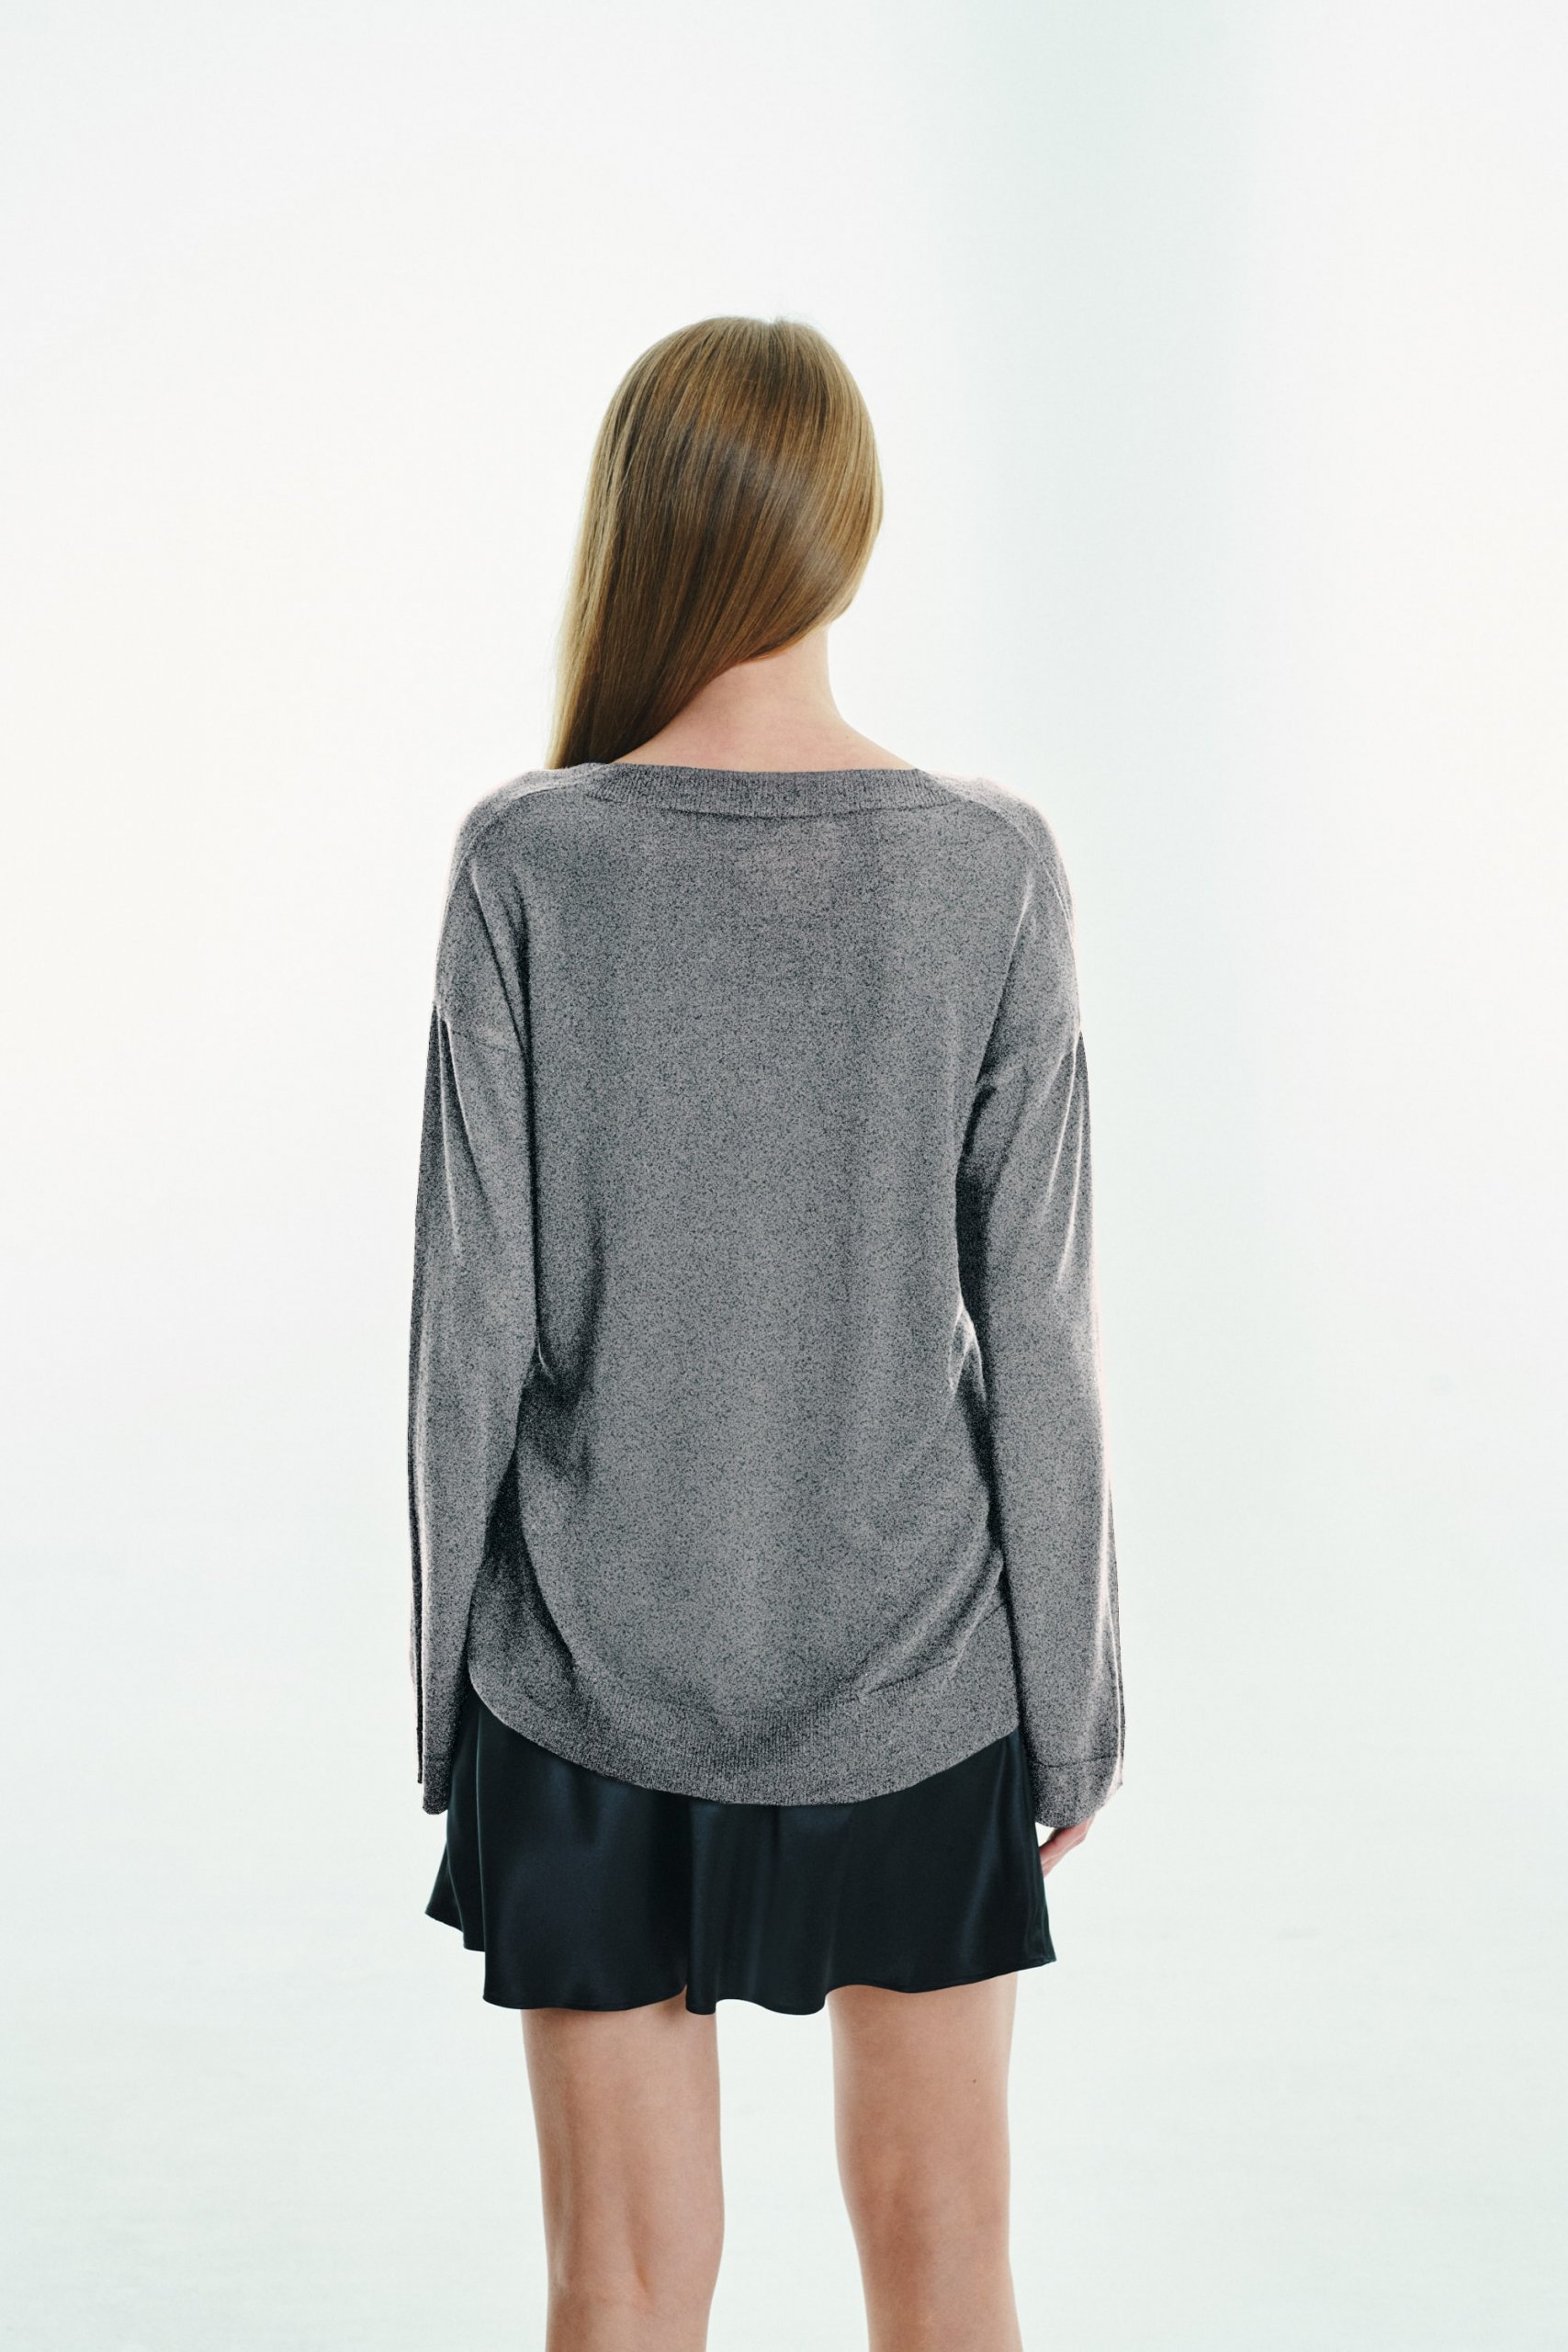 Silk Jersey Oversize Jumper in grey